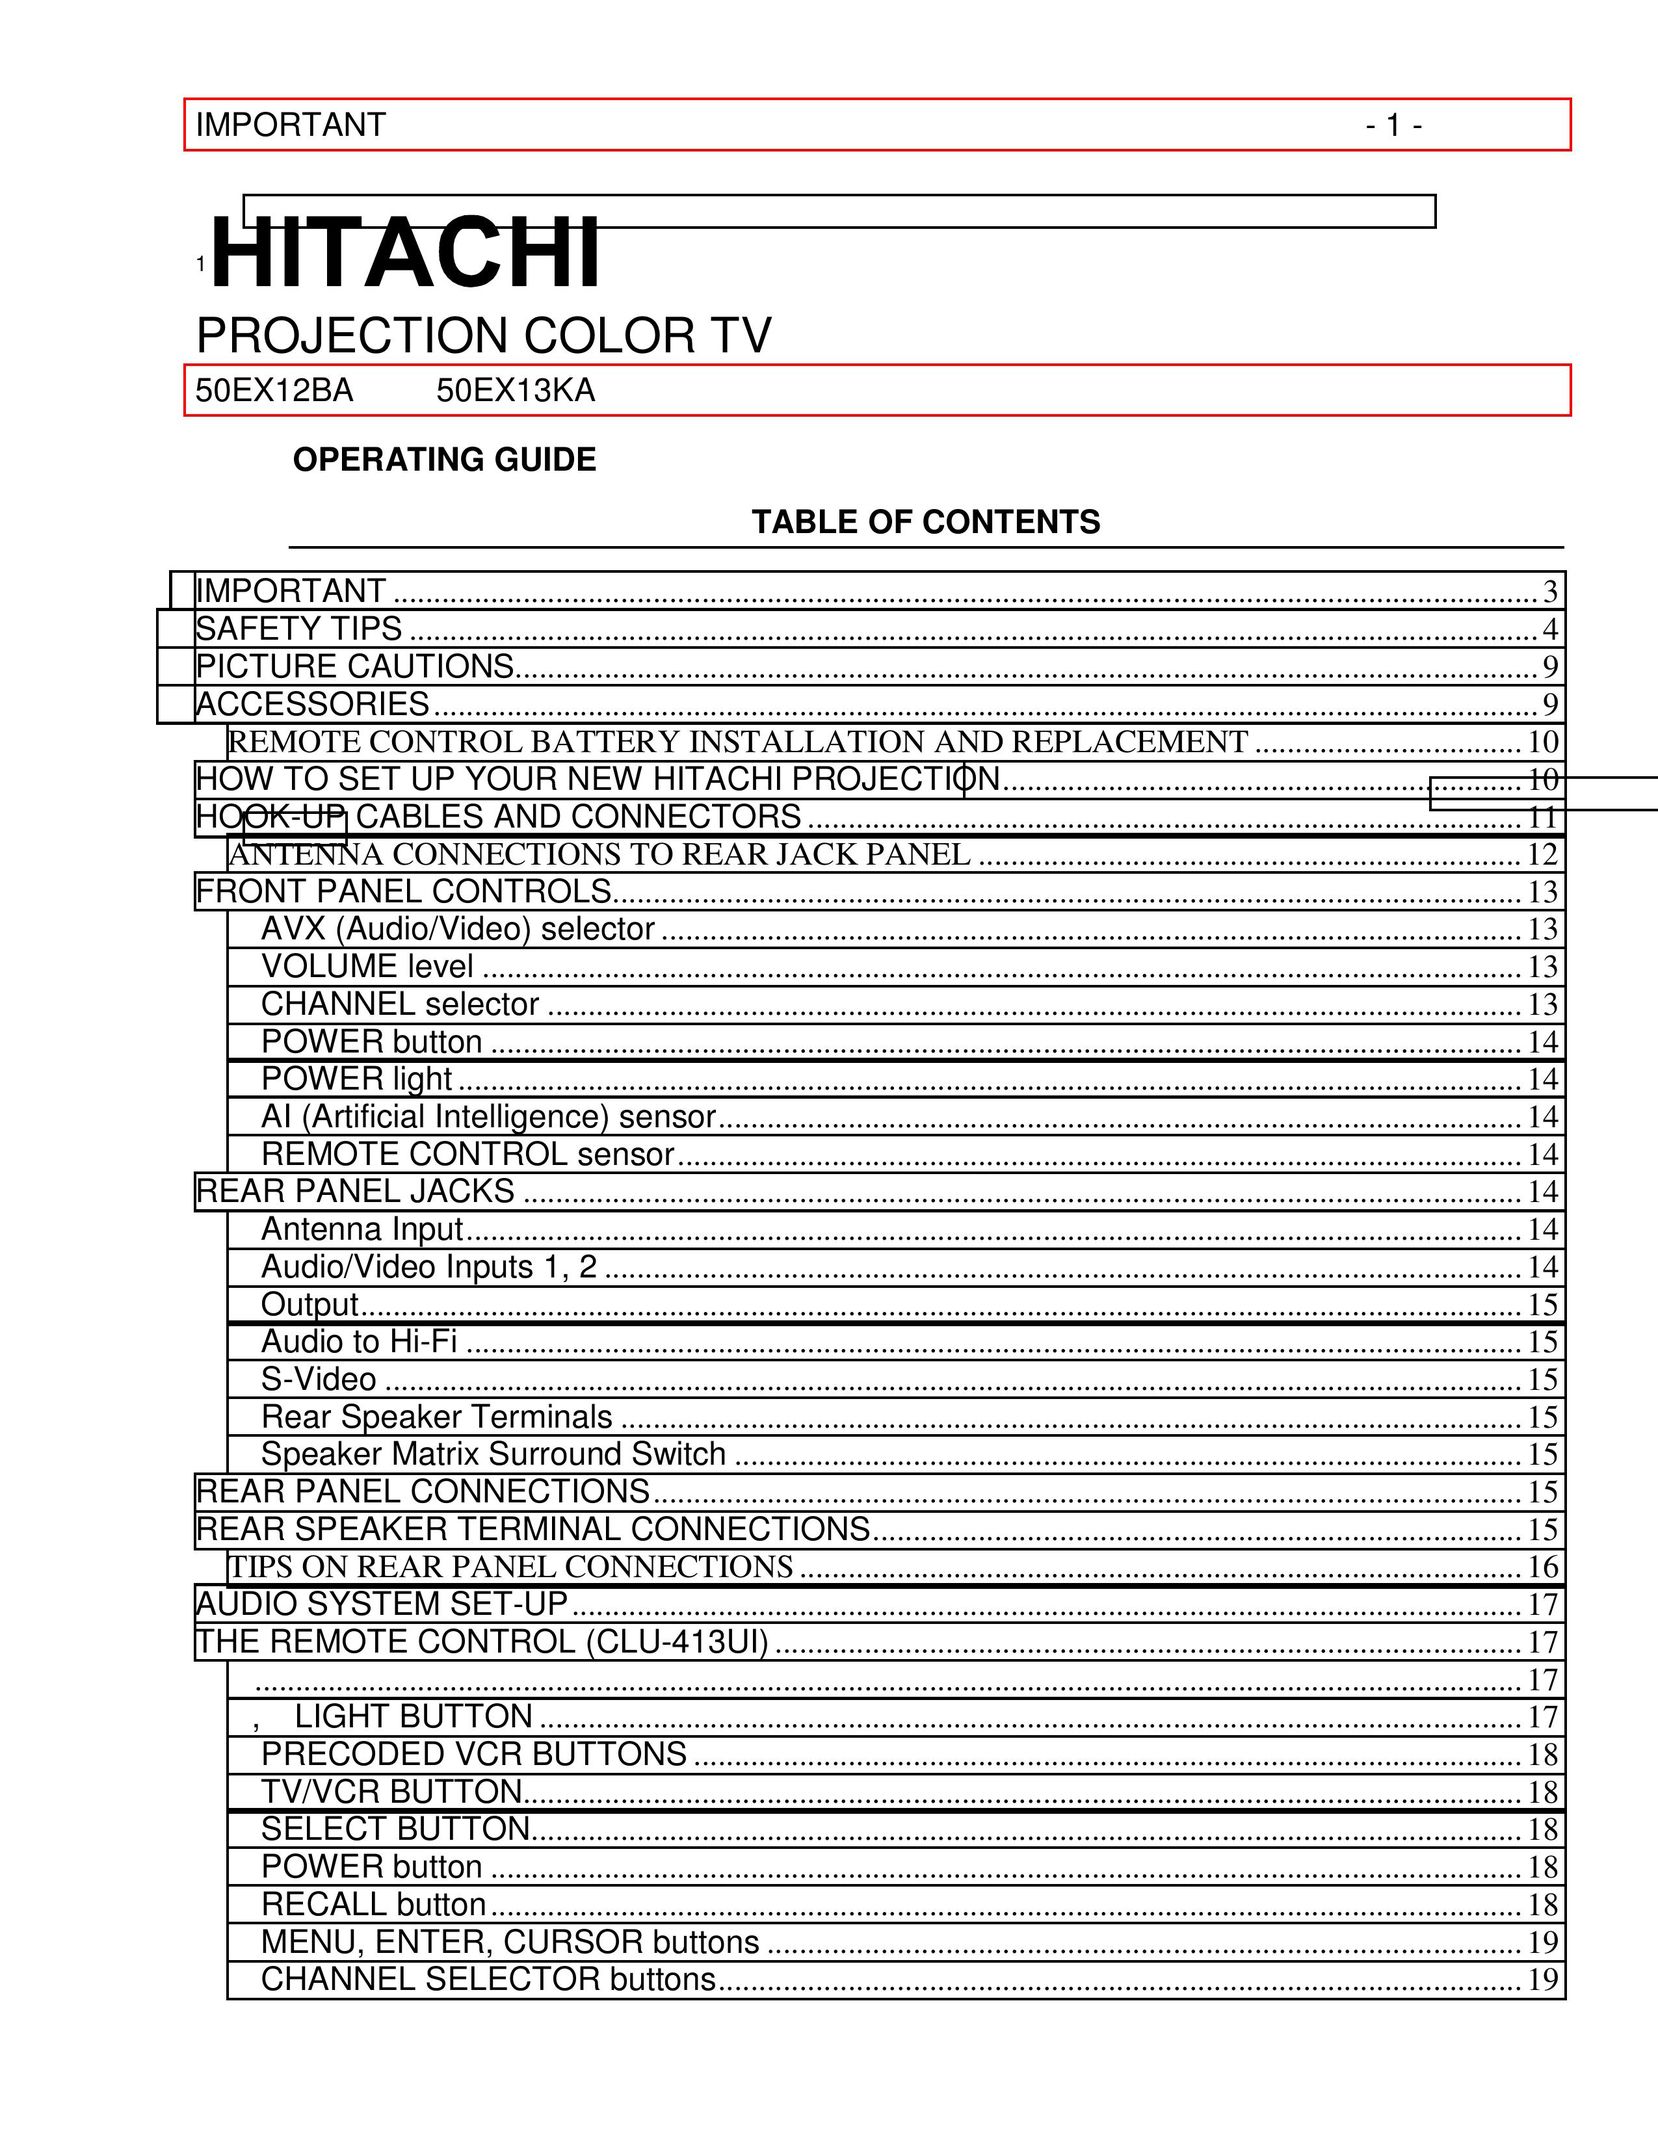 Hitachi 50EX13KA Projection Television User Manual